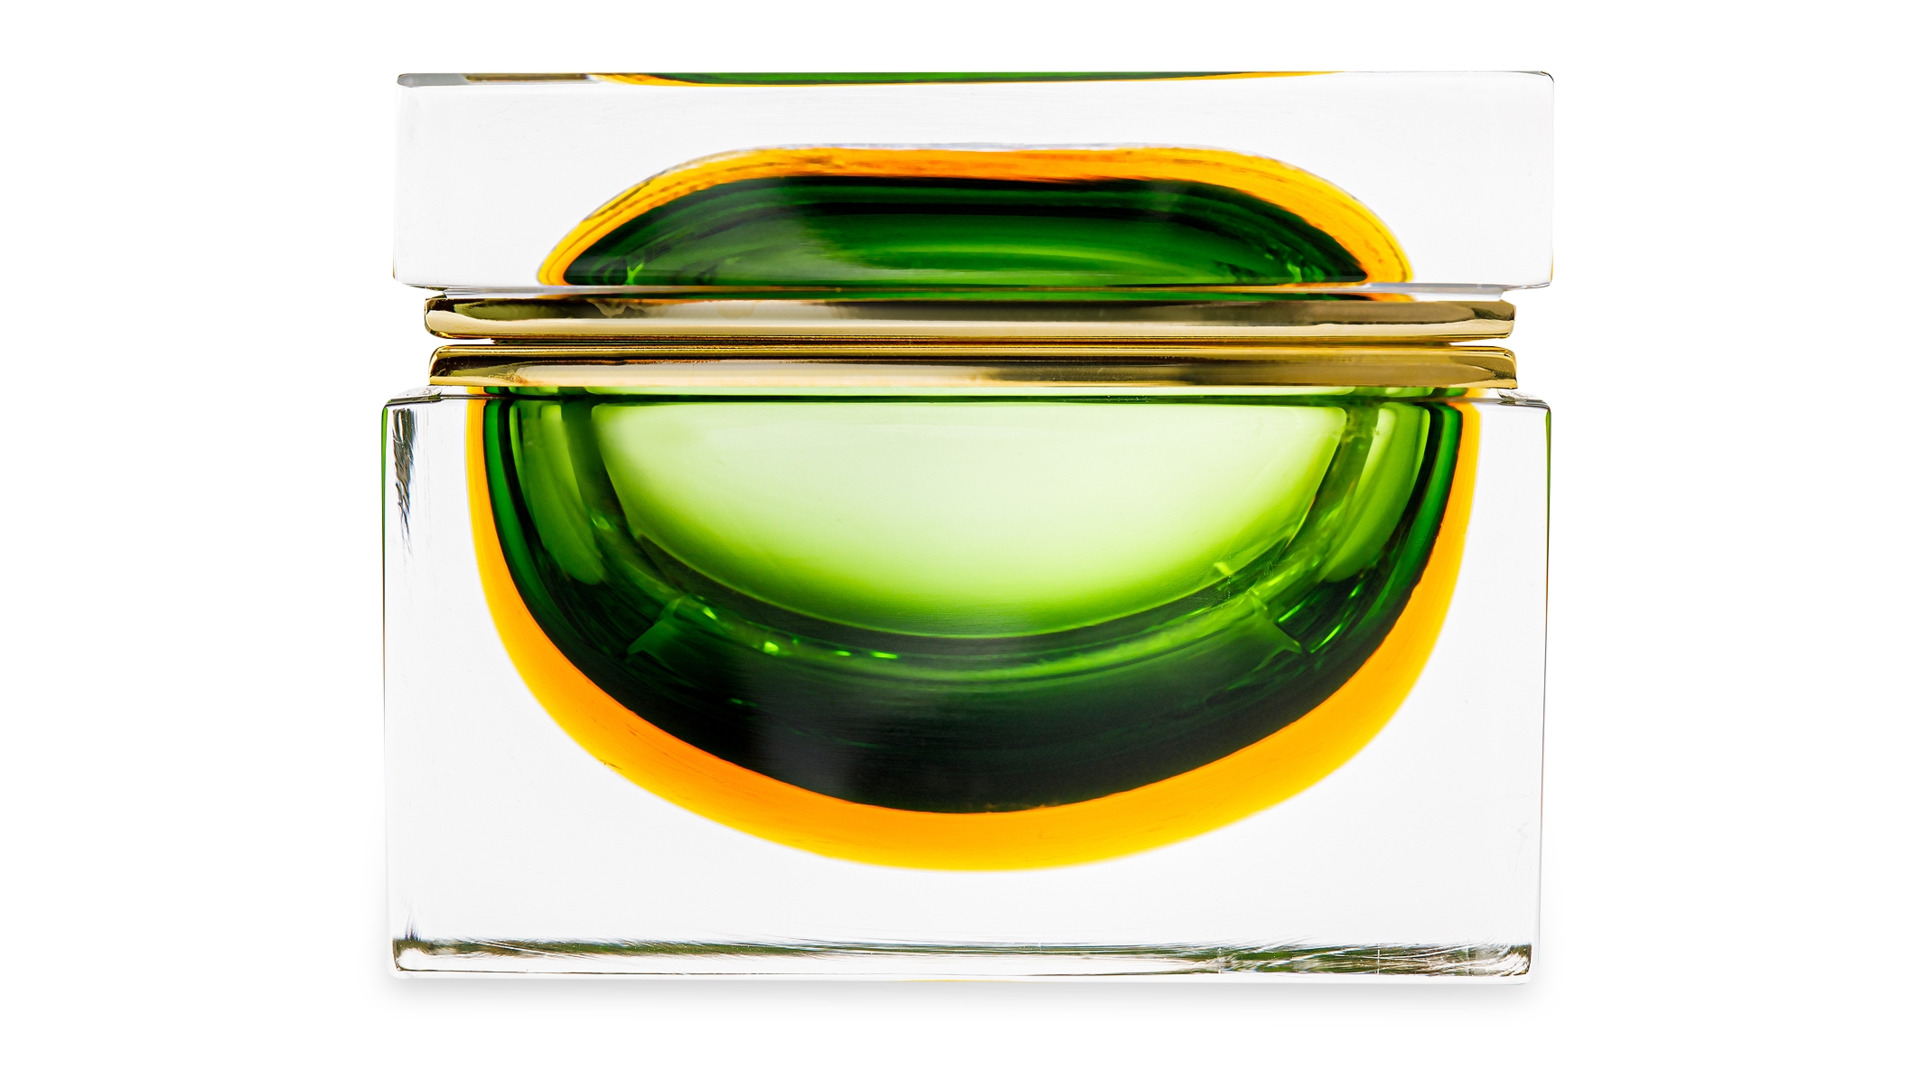 Шкатулка для украшений Alessandro Mandruzzato 13х8х11 см, стекло муранское, золото, зеленая